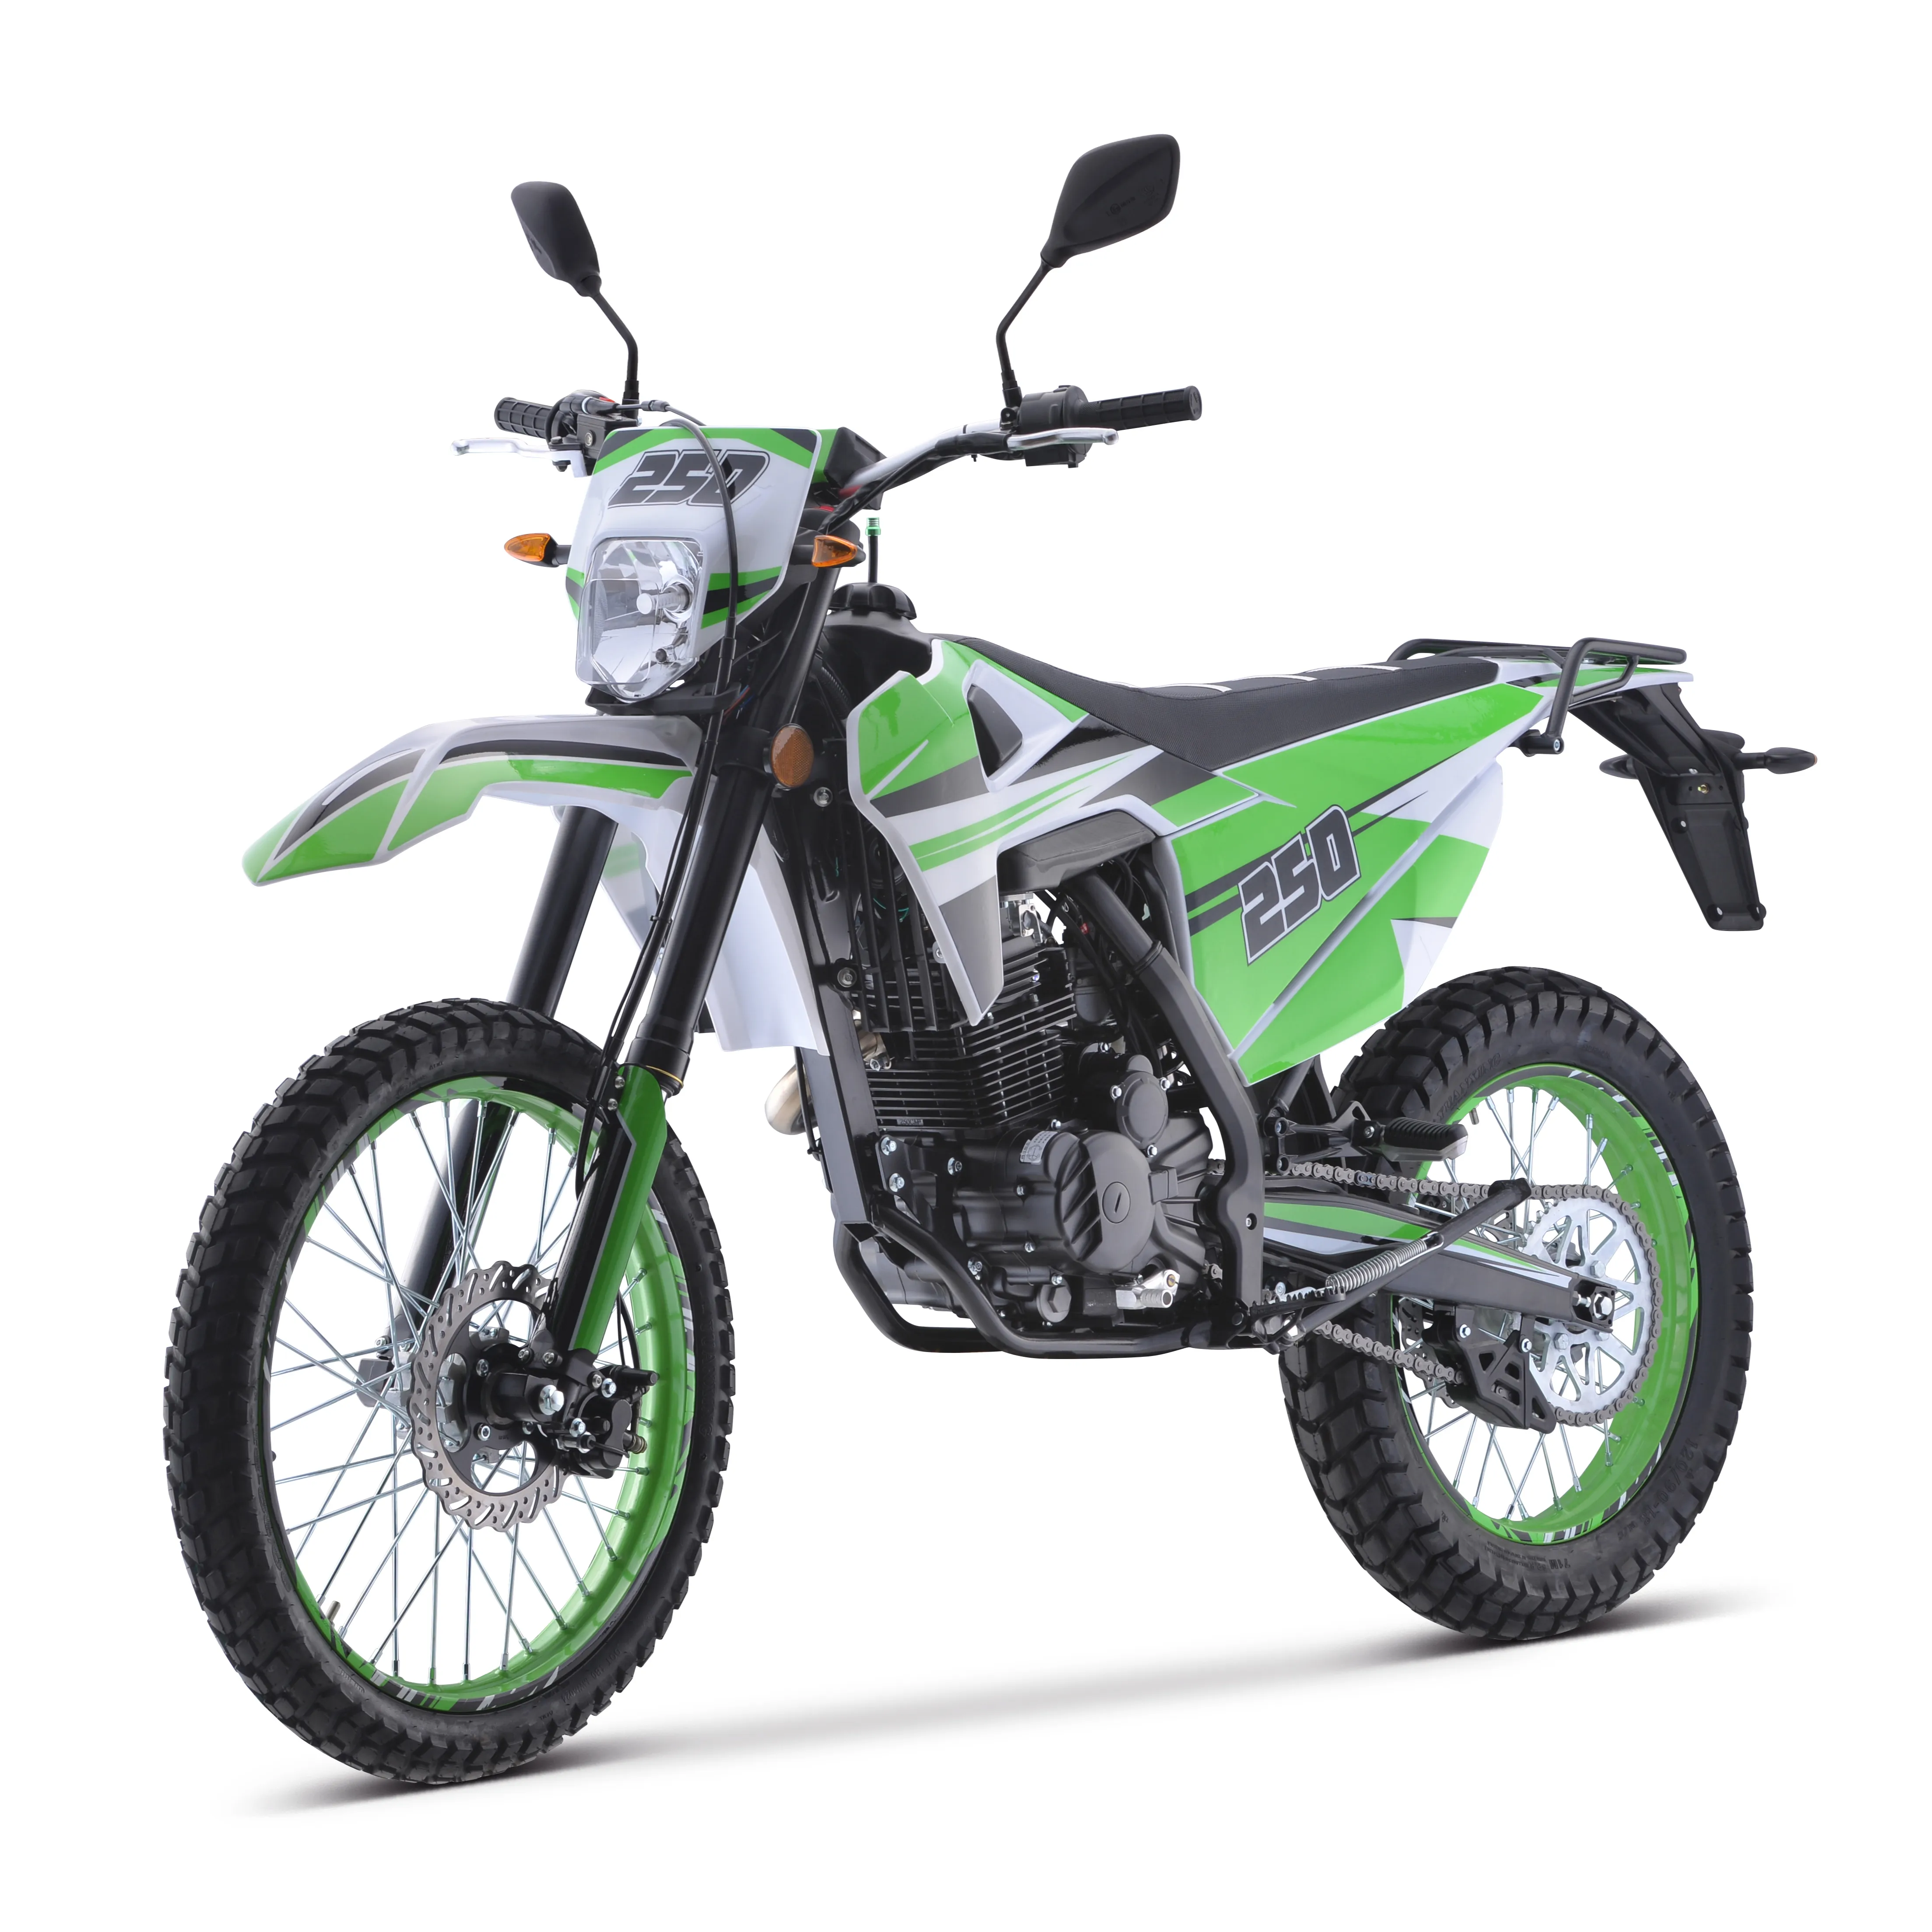 Oem prezzo di fabbrica Pit Bike 300cc Moto Cross 250CC nero adulto 250cc Dirt Bike Sport Moto